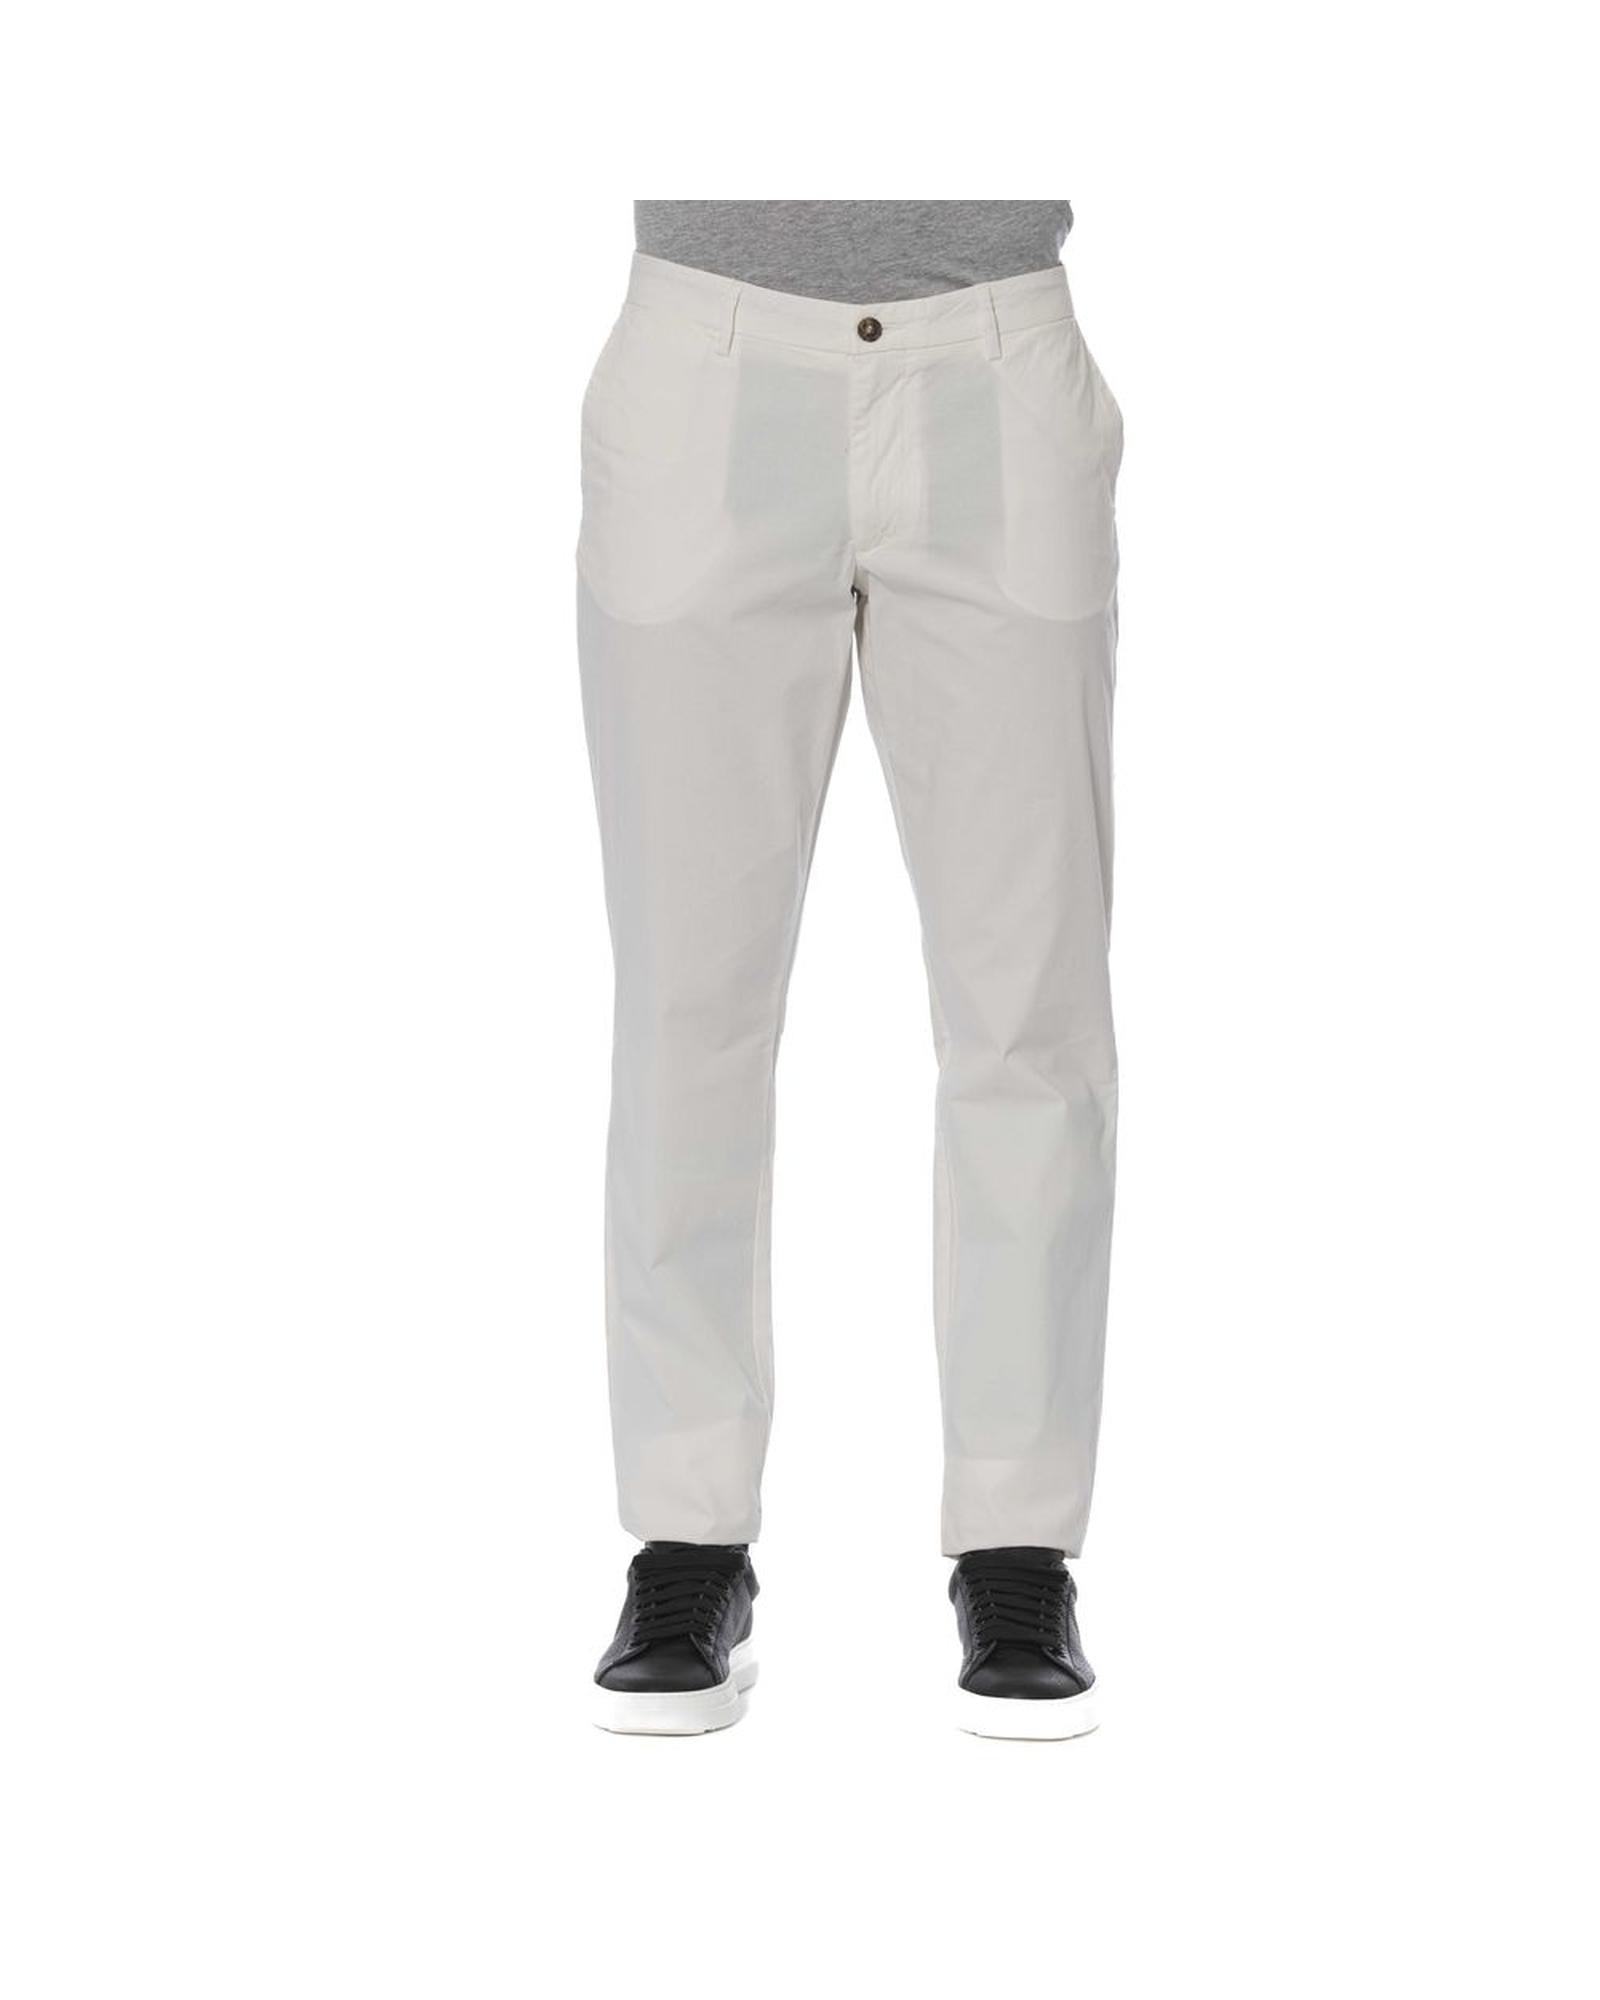 Men's White Cotton Jeans & Pant - W44 US